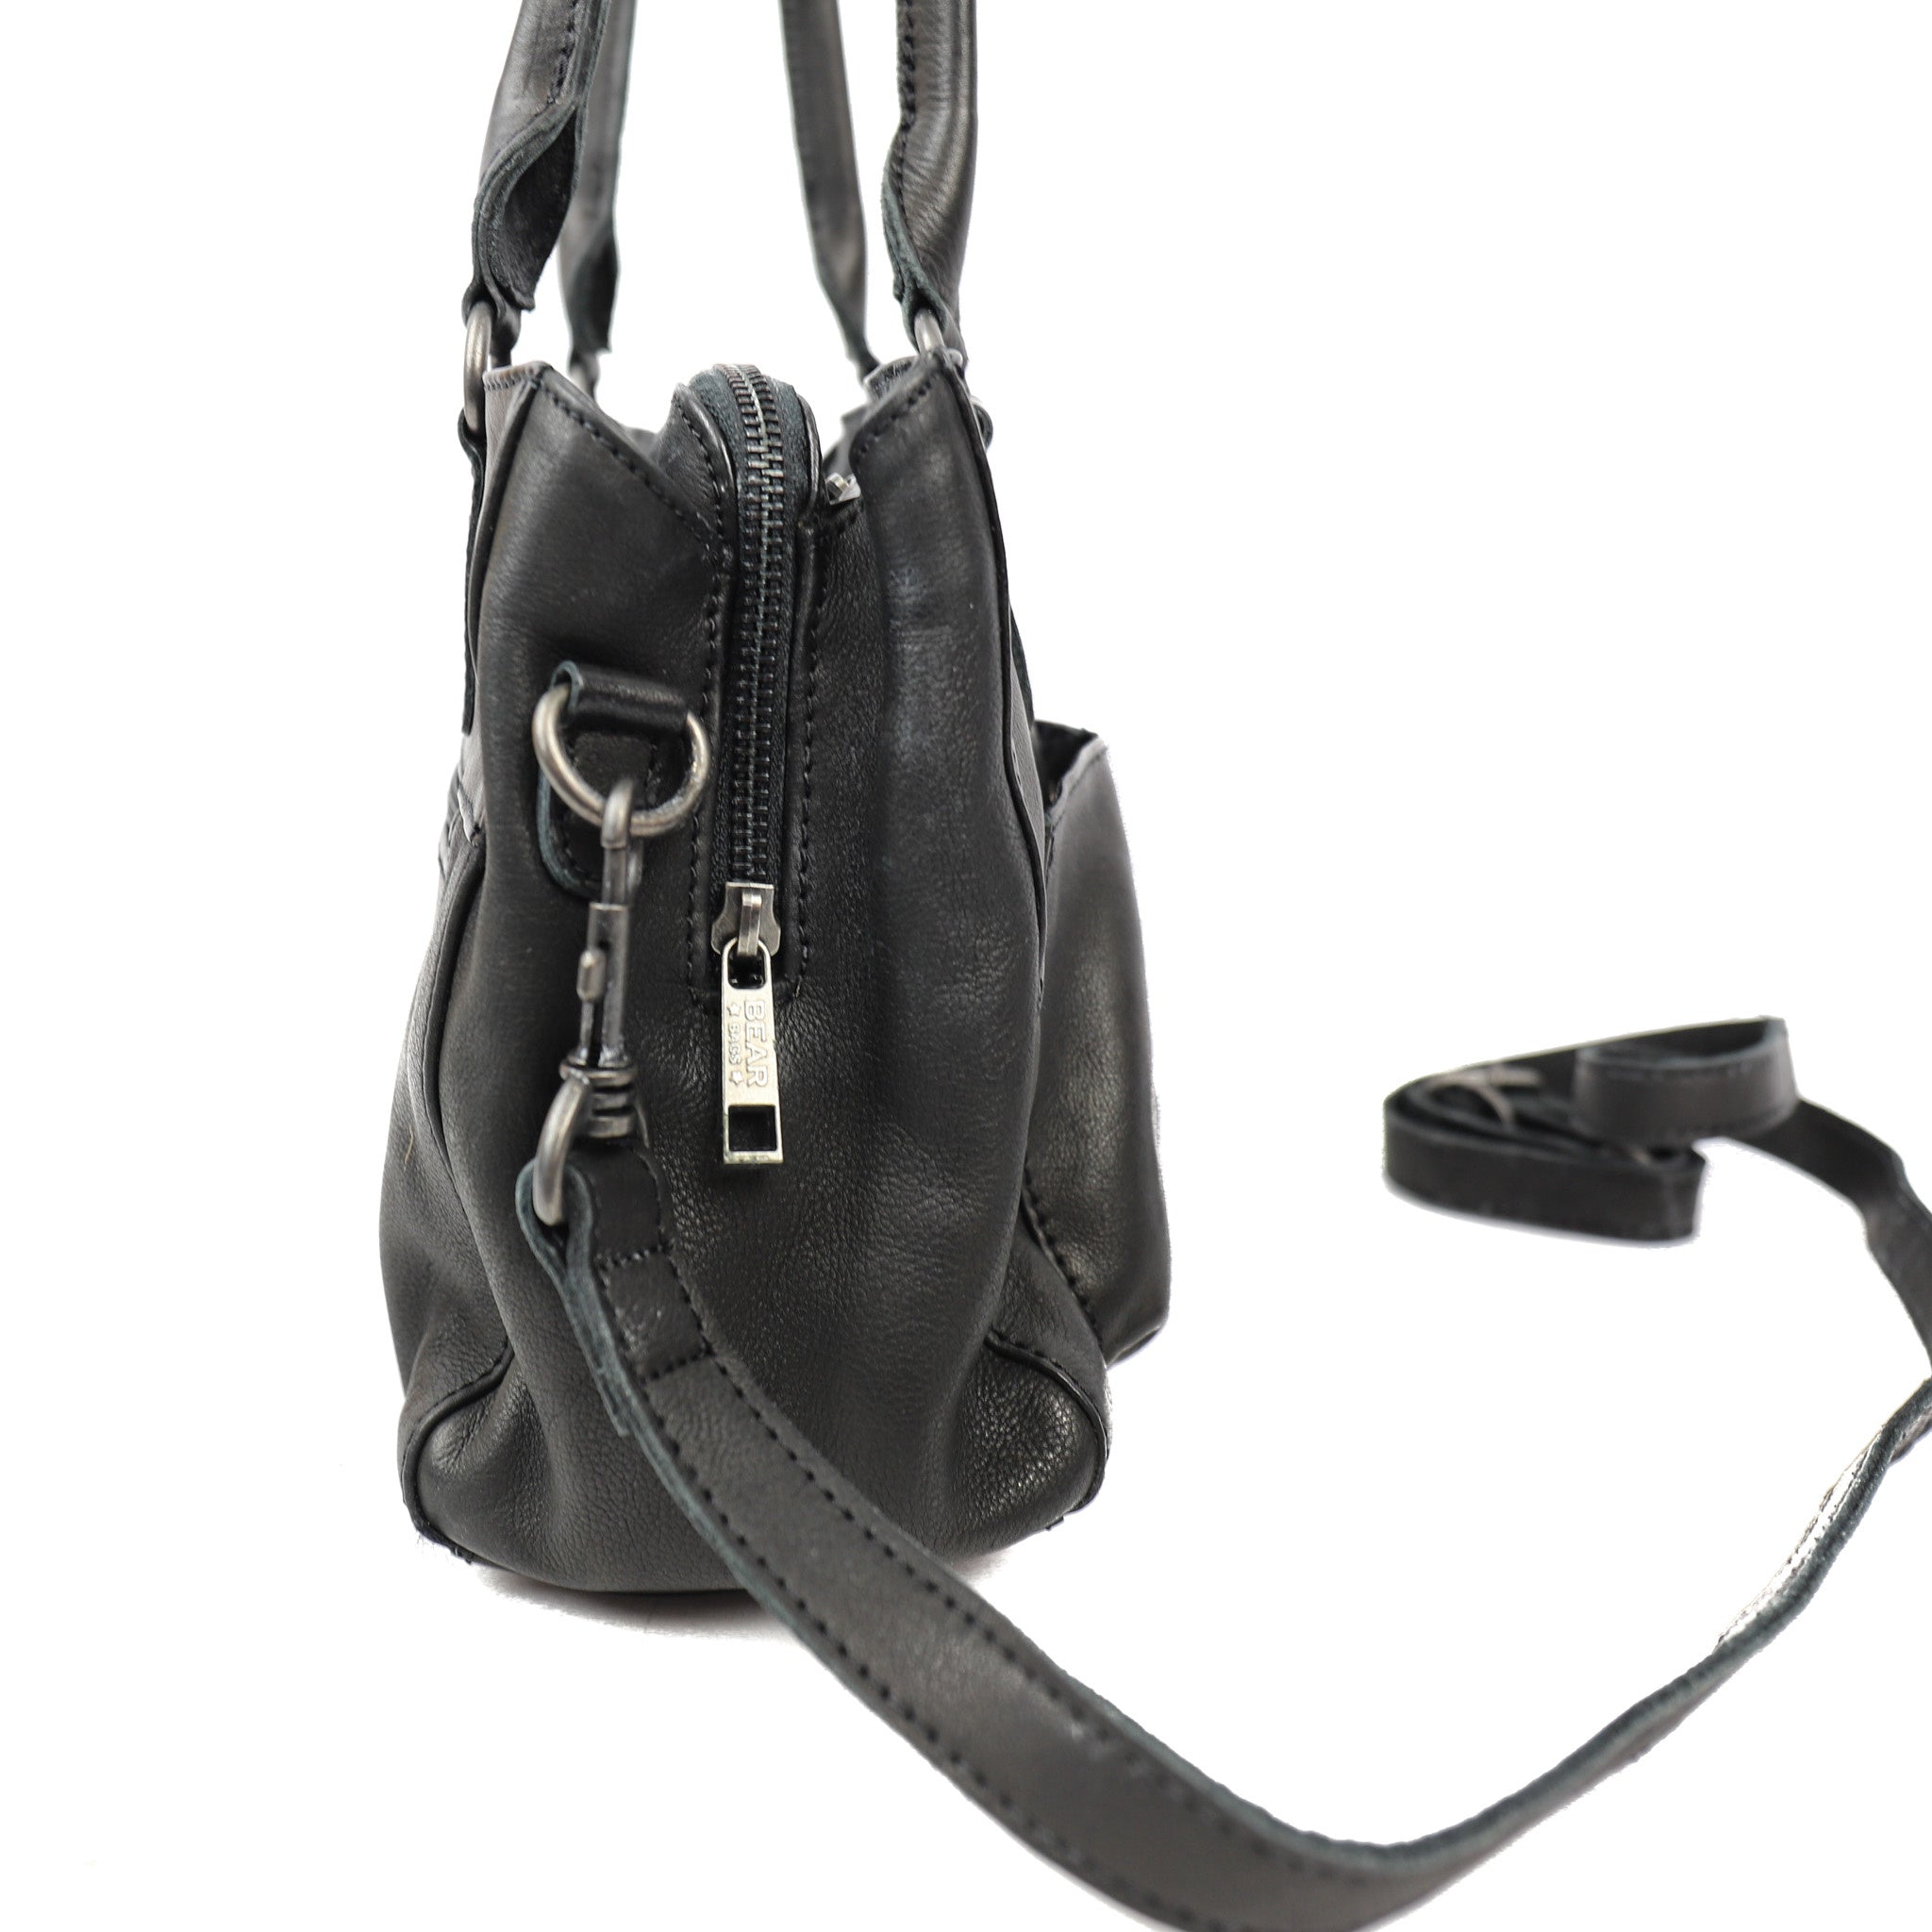 Hand-/schoudertasje 'Rita' zwart - CP 1201